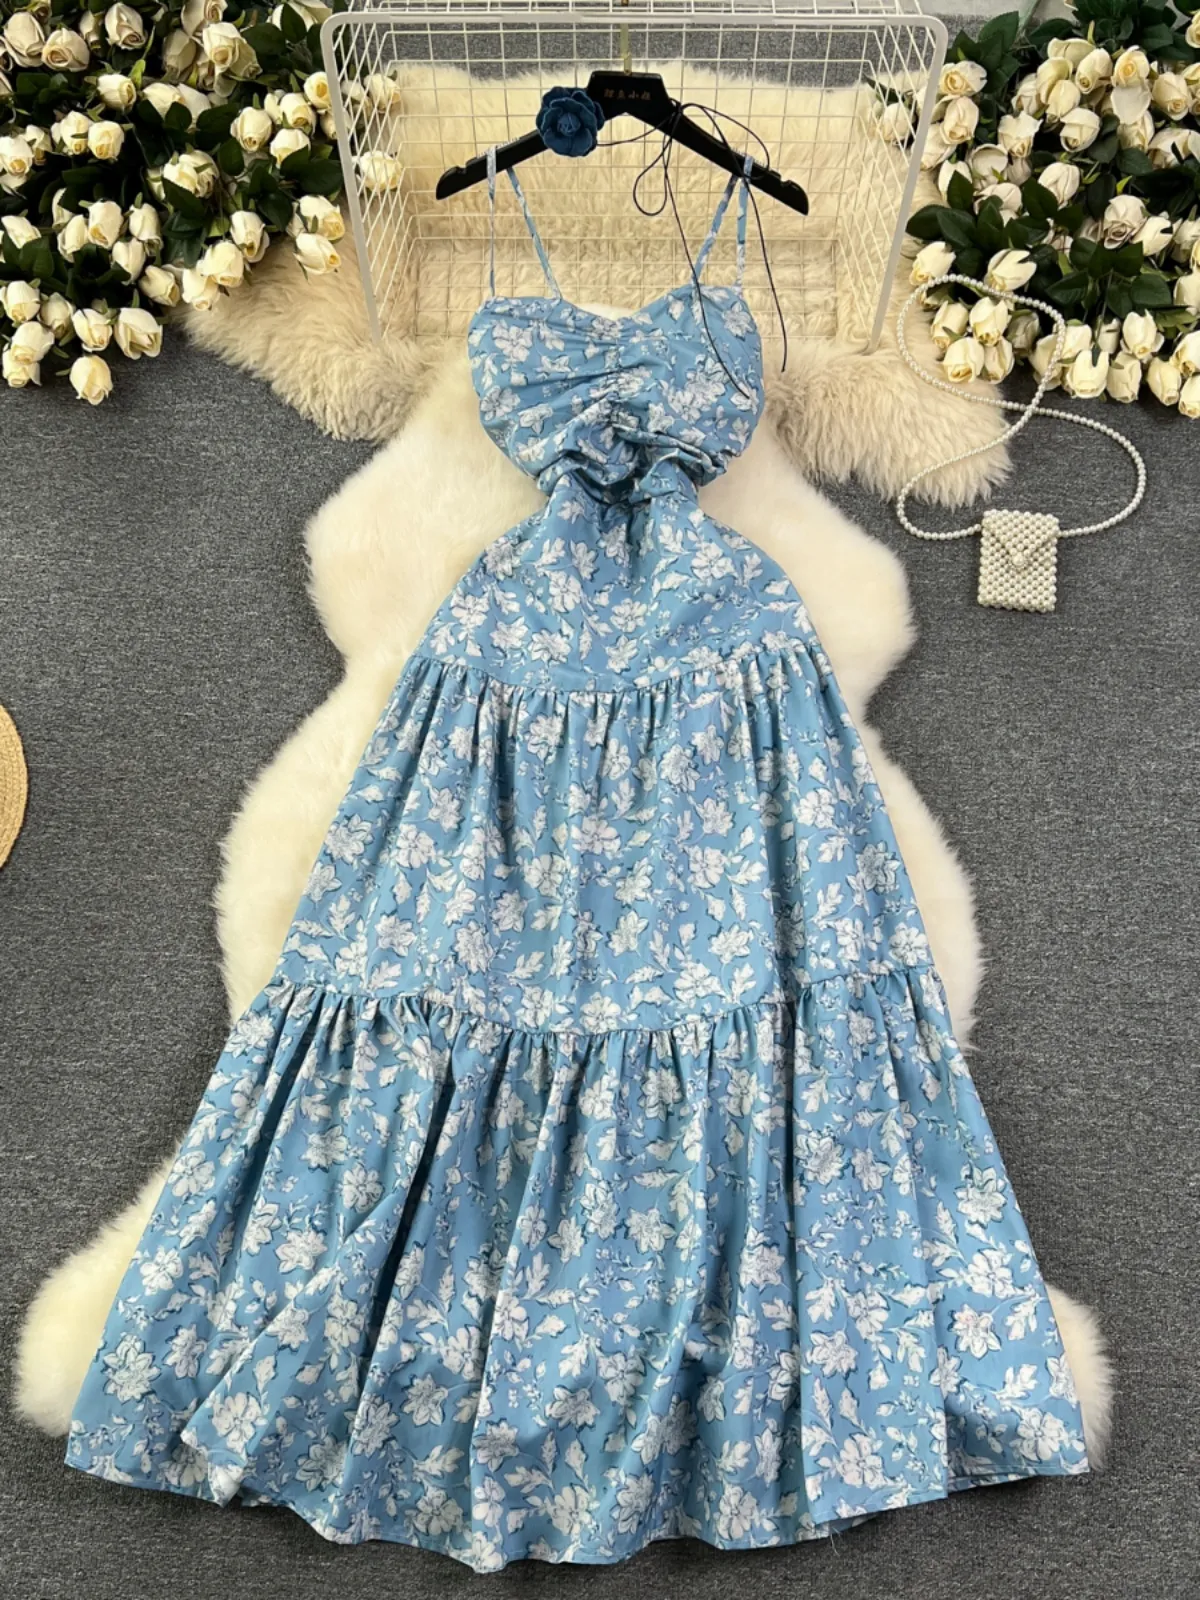 Tea break dress for women to wear in summer, seaside vacation style floral dress, French strapless waist cinching fairy dress